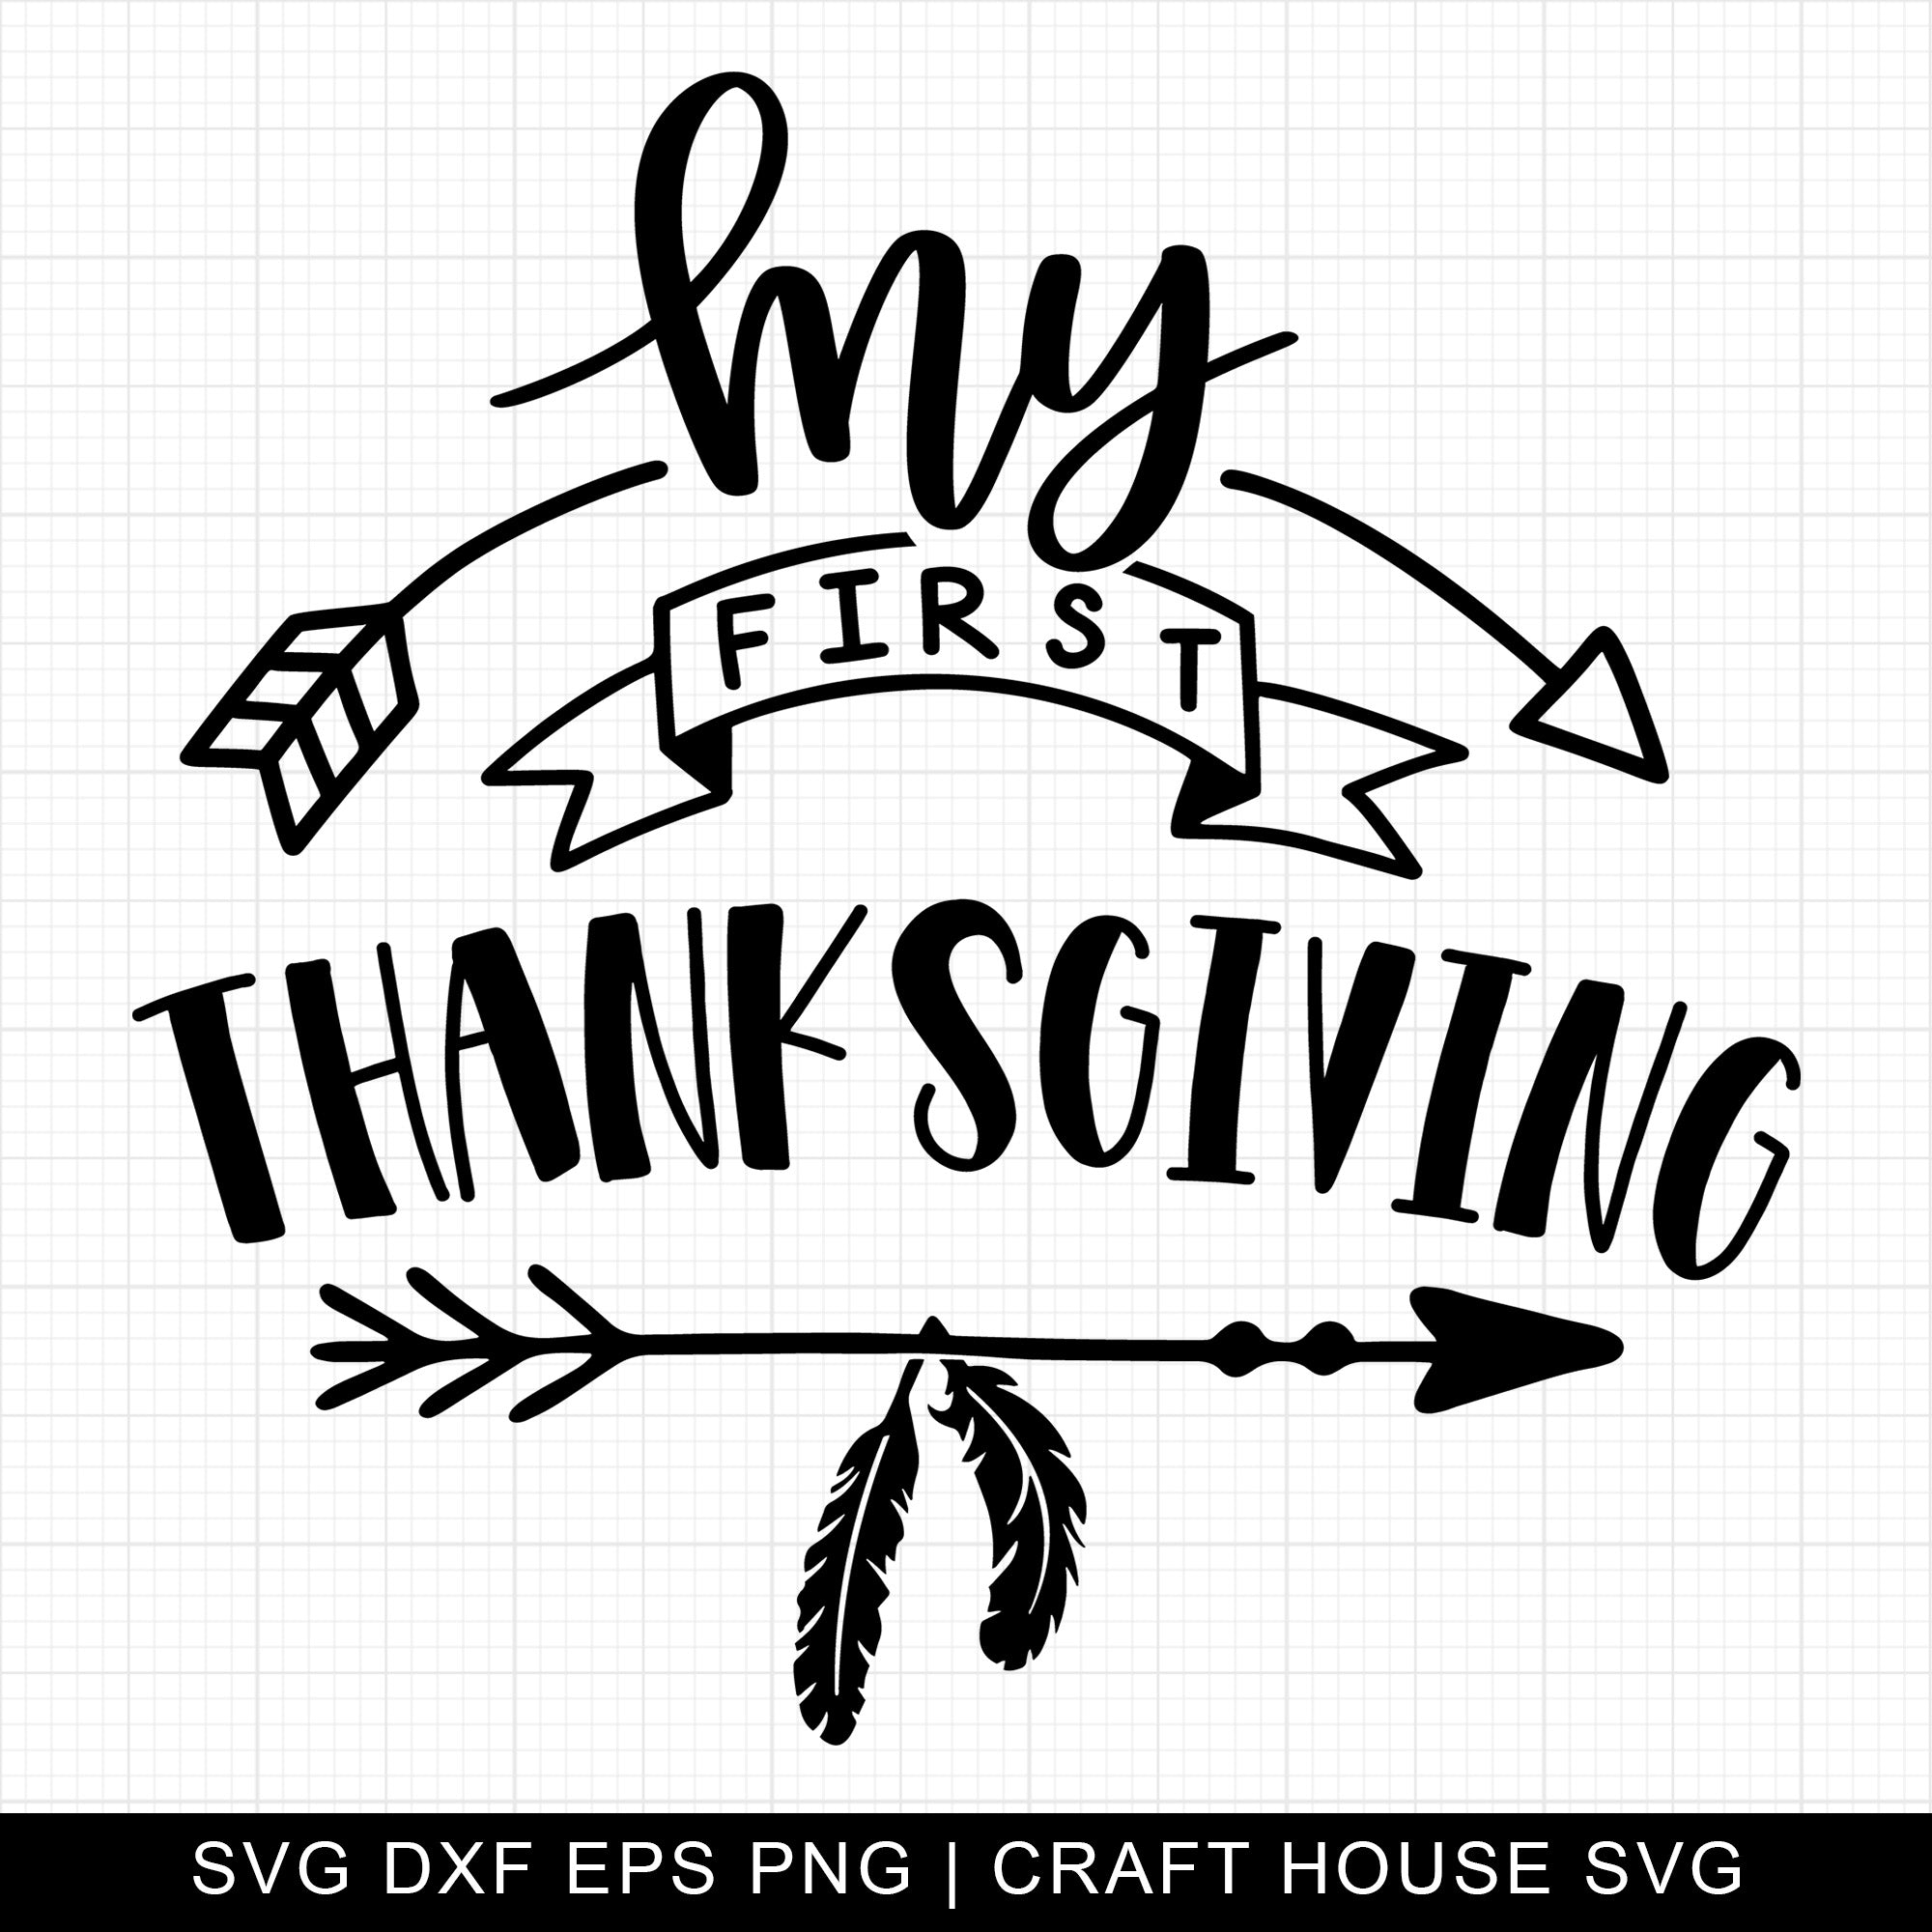 My first thanksgiving SVG | M6F5